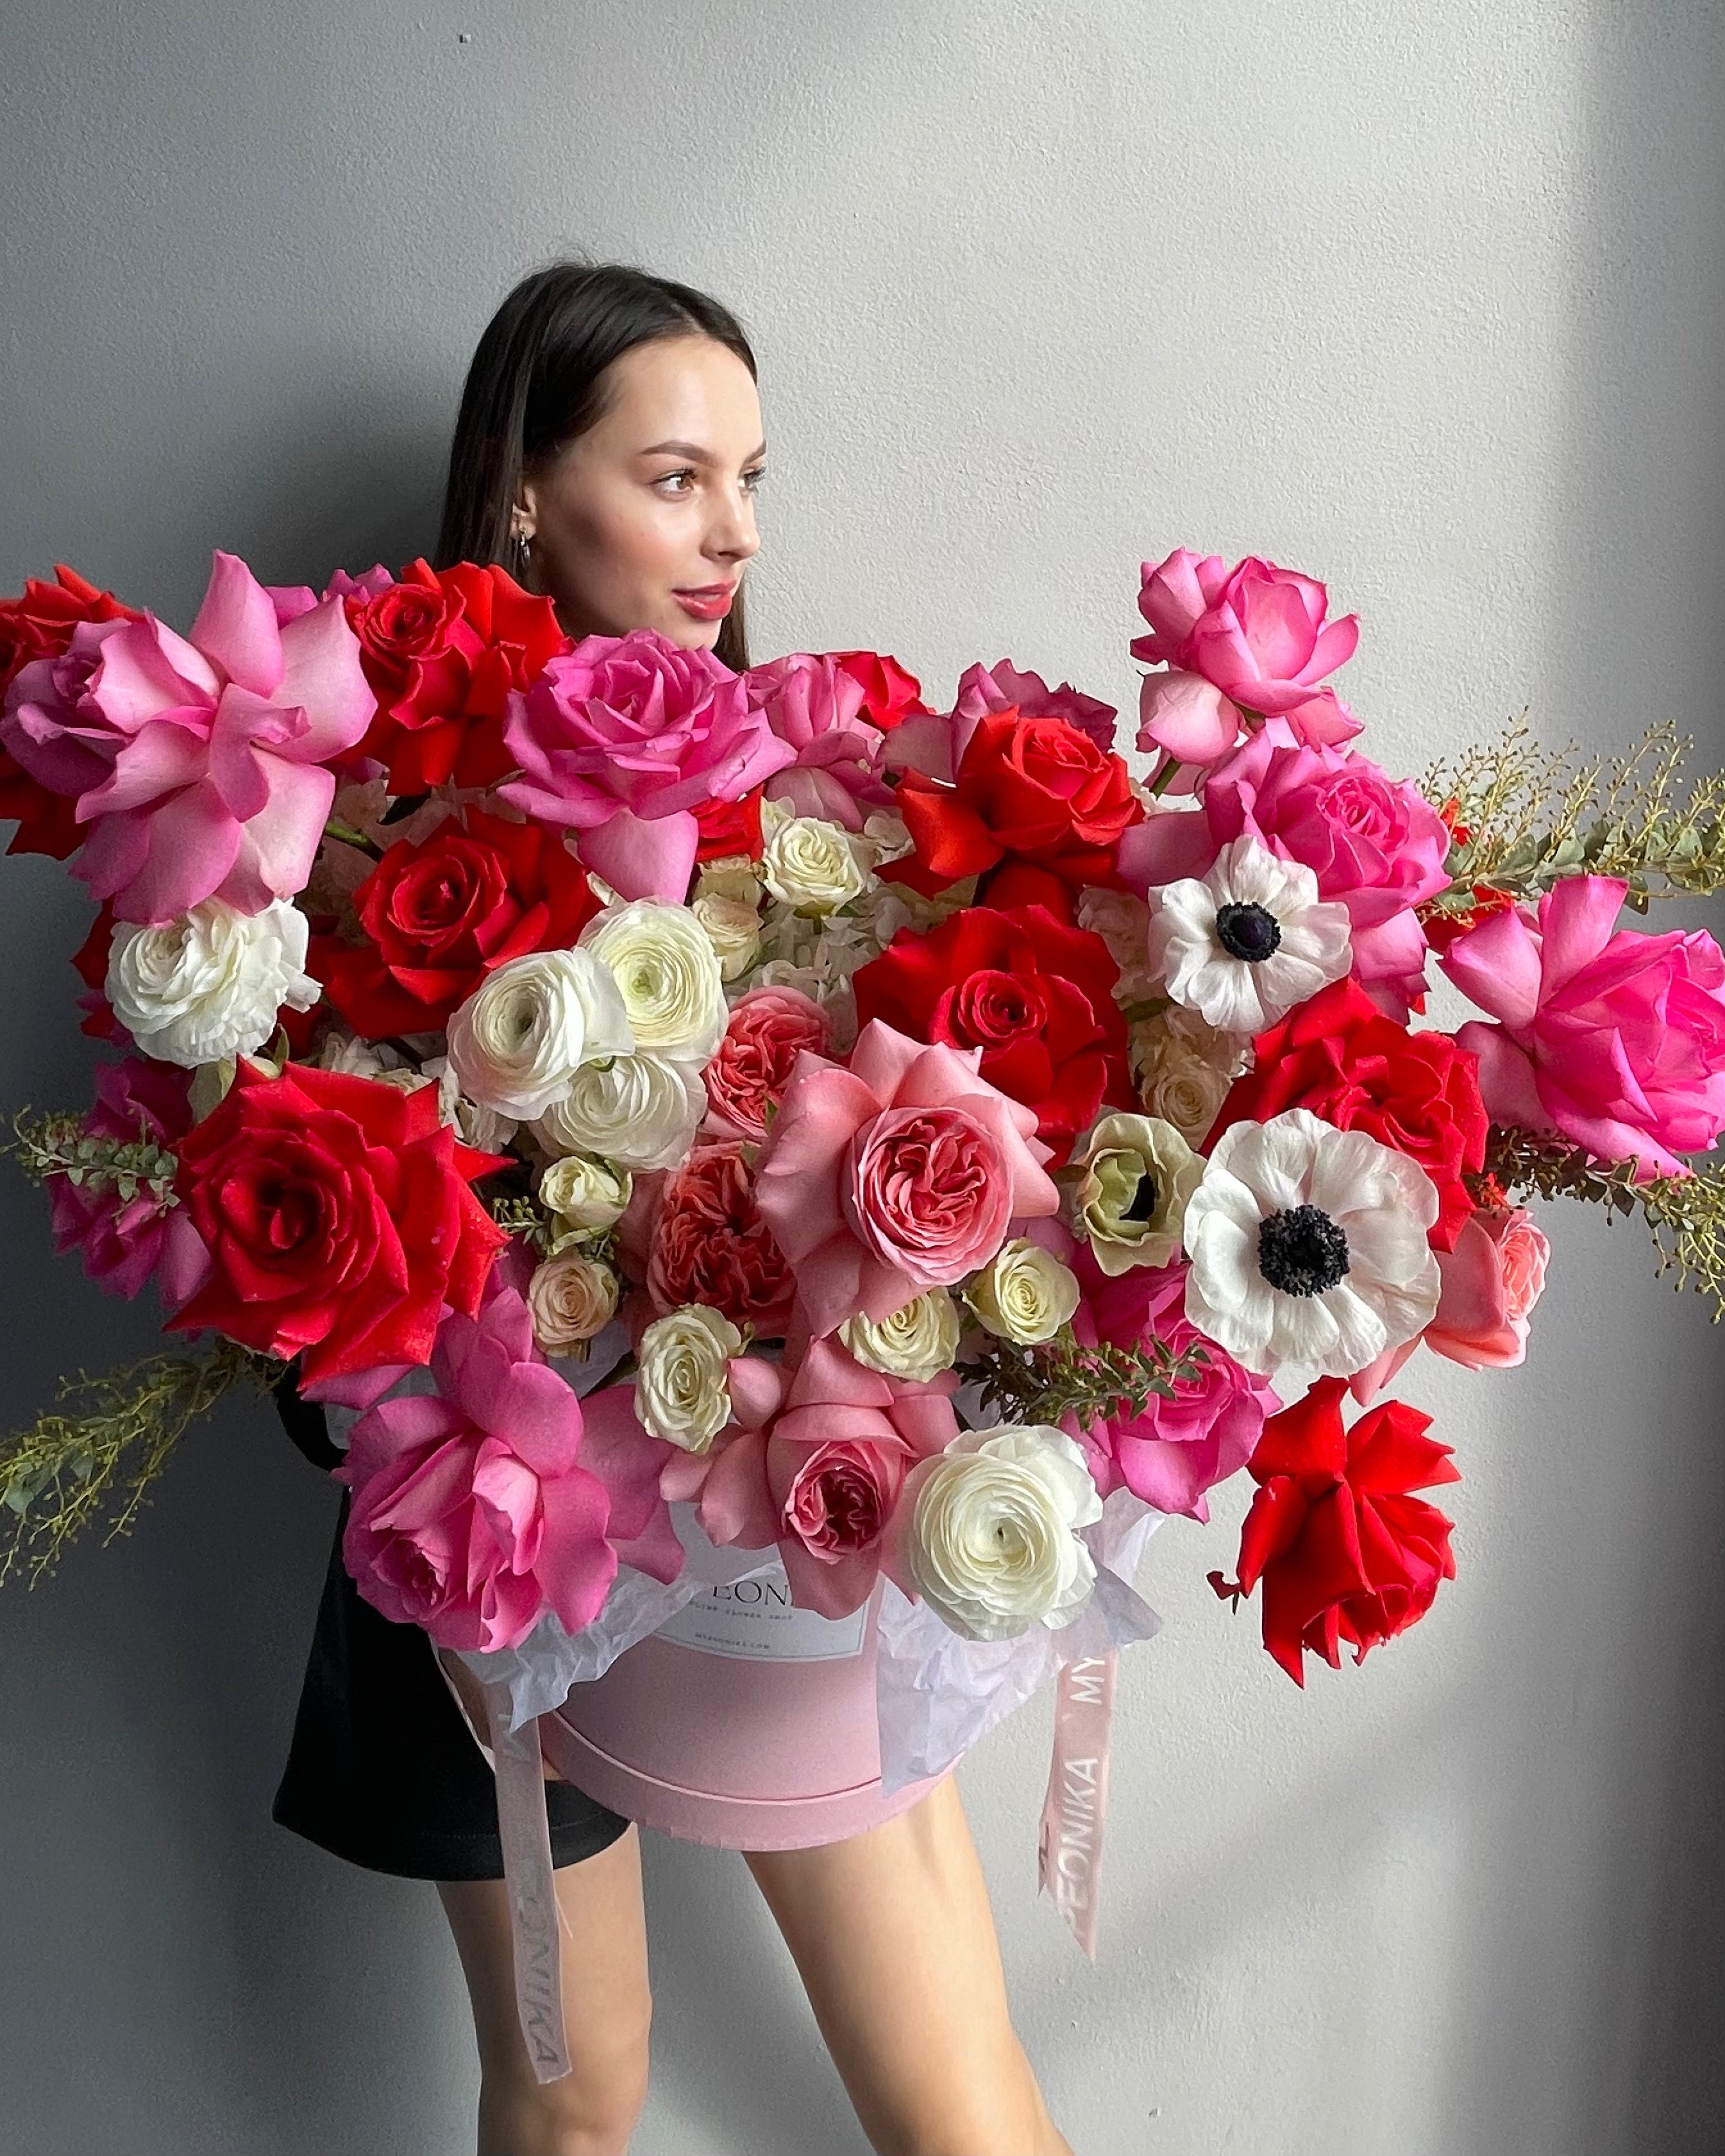 Flower box “Designed to surprise” - garden roses, ranunculuses, anemones